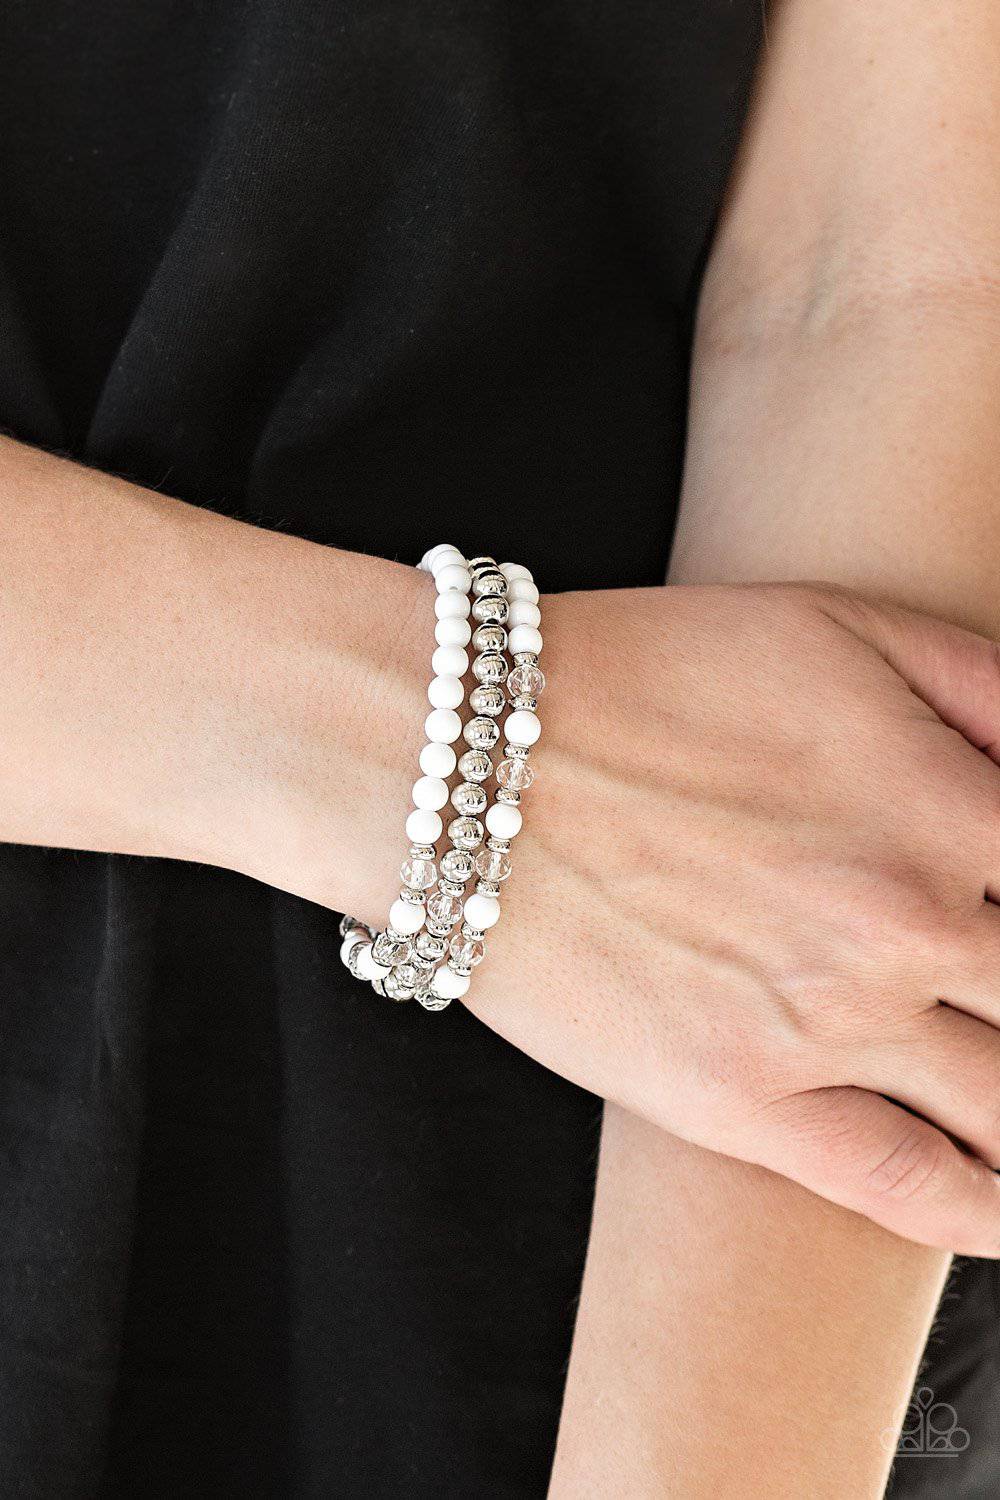 Irresistibly Irresistible - White Stretchy Bracelets - Paparazzi Accessories - GlaMarous Titi Jewels